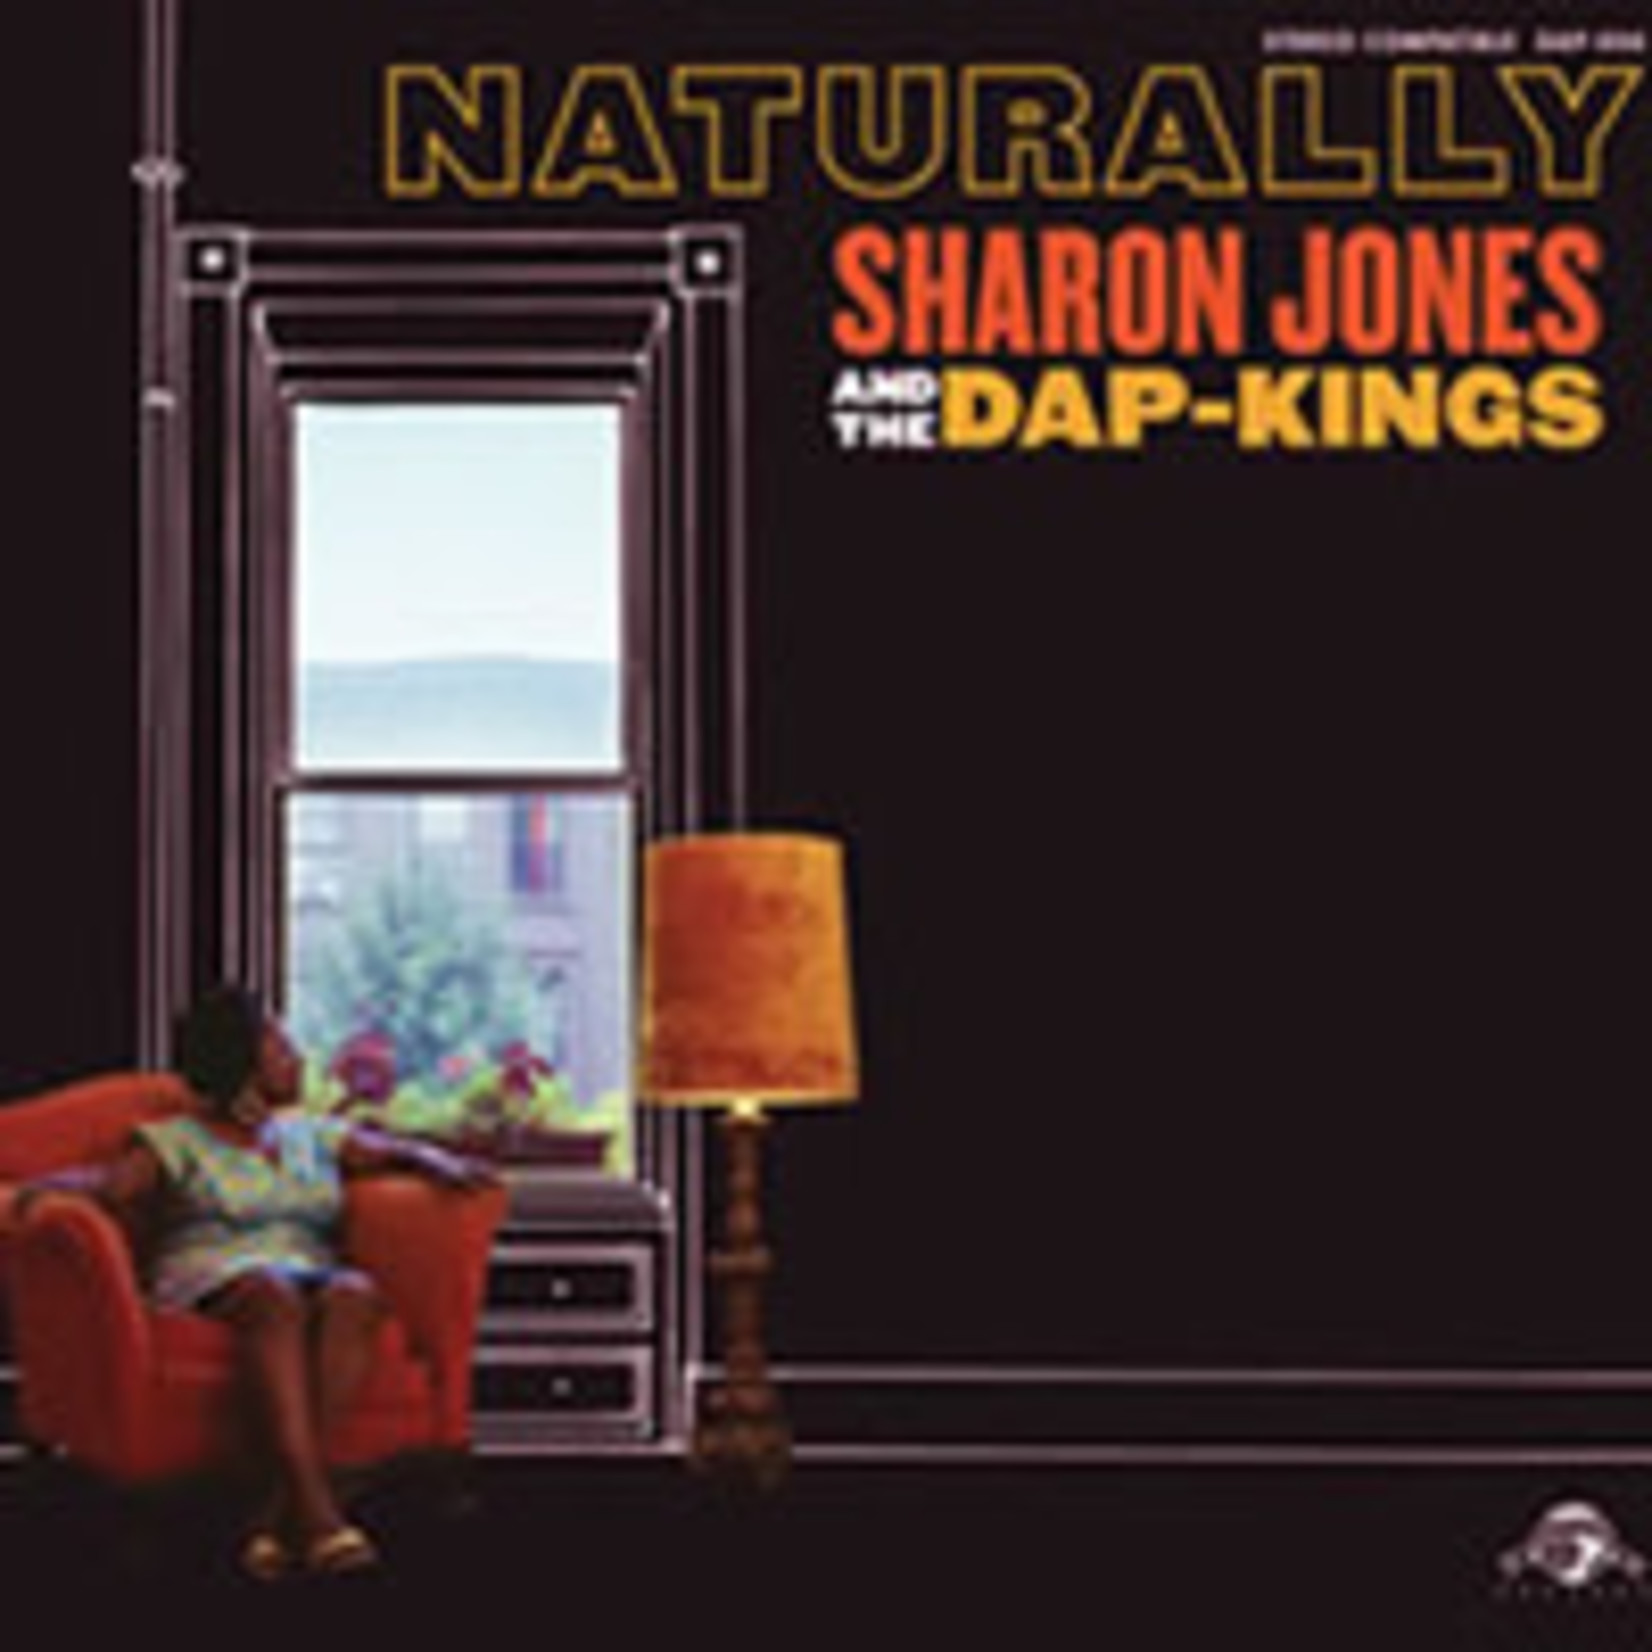 Daptone Sharon Jones & The Dap-Kings - Naturally (LP)